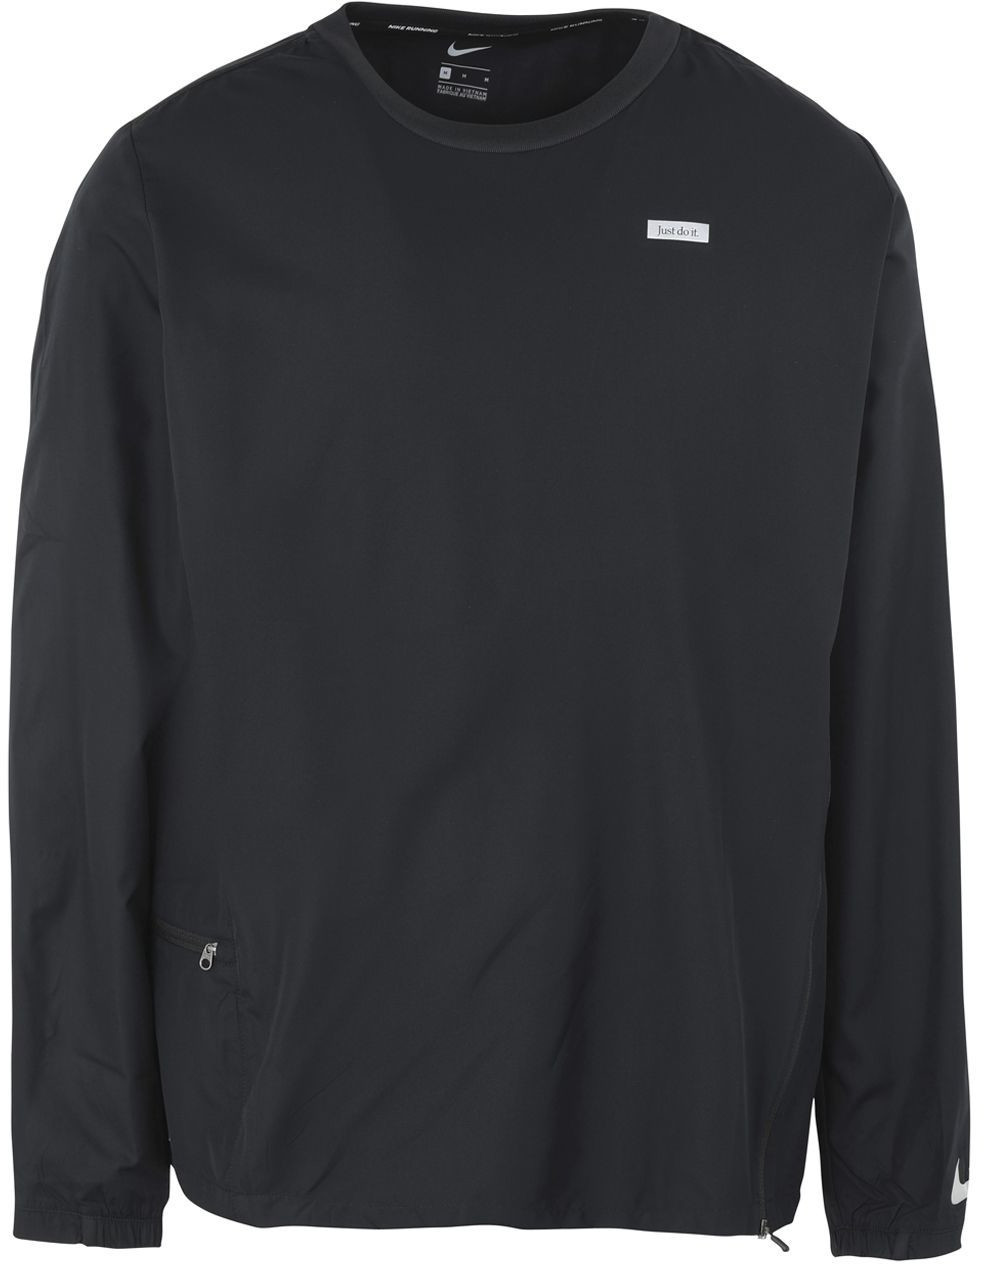 Nike Essential Crew Jacket (928423) black/reflective silver